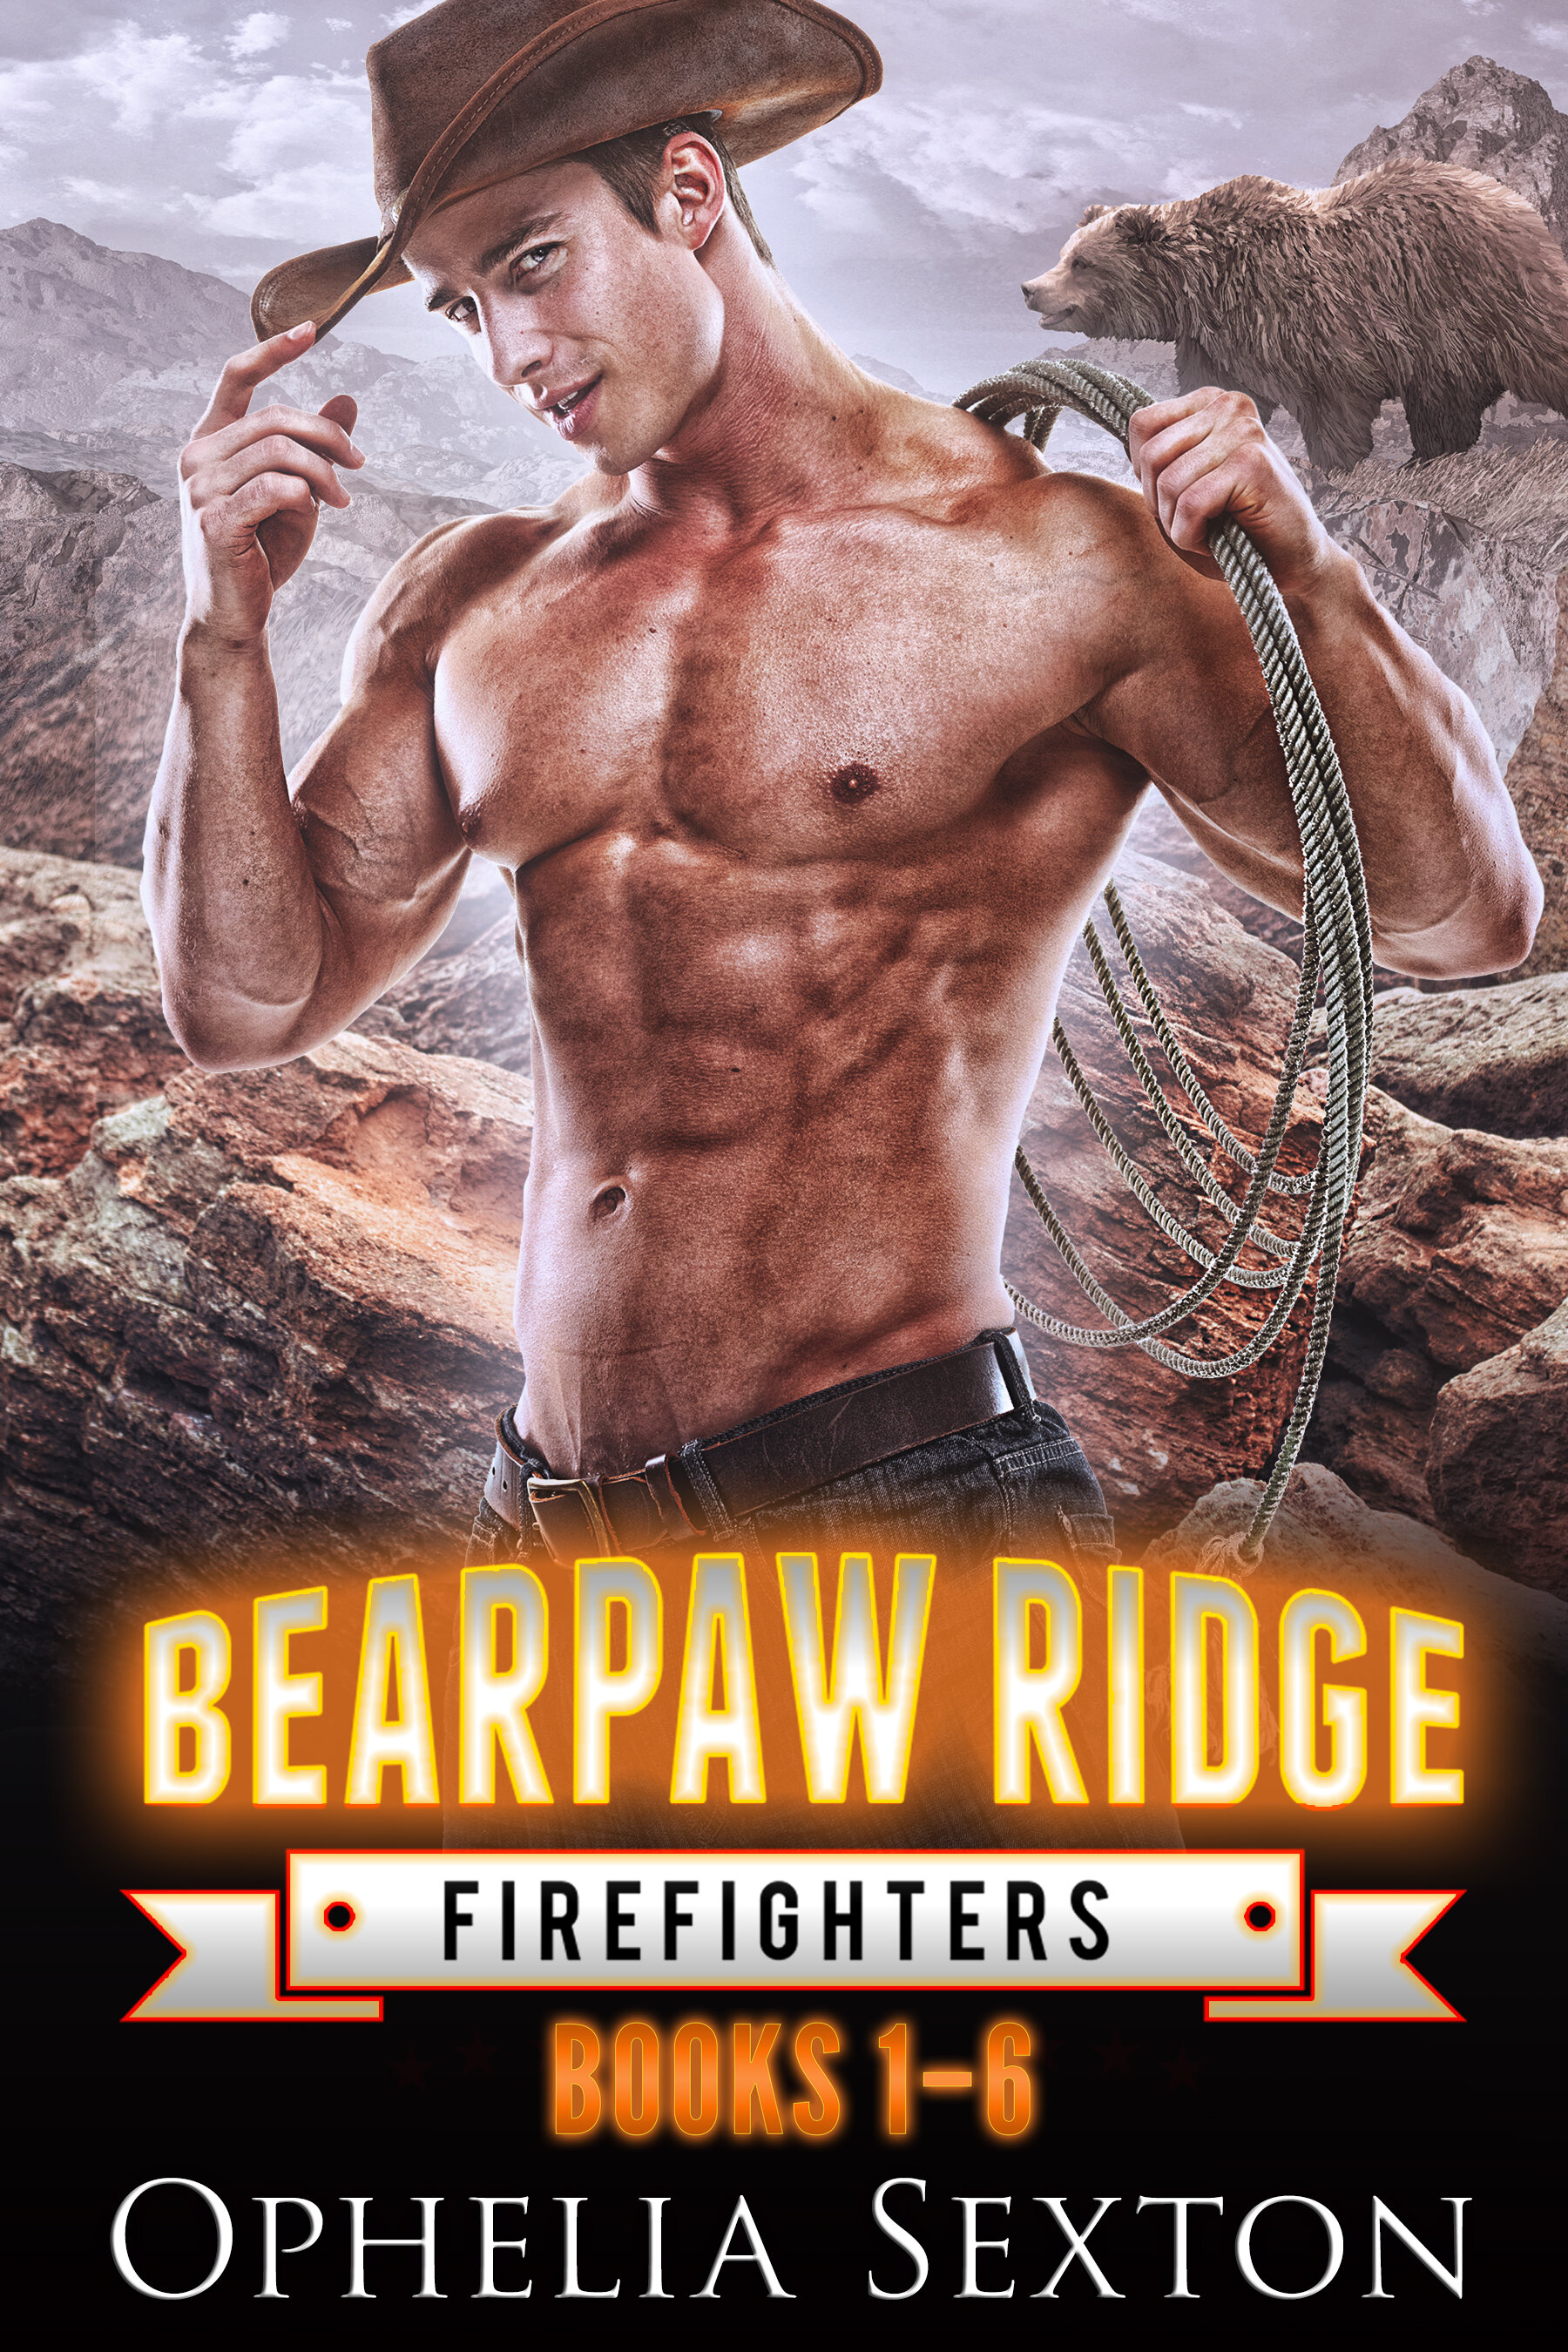 Bearpaw Ridge Firefighters - boxed set - Bliss Devlin RECOVER flat.jpg